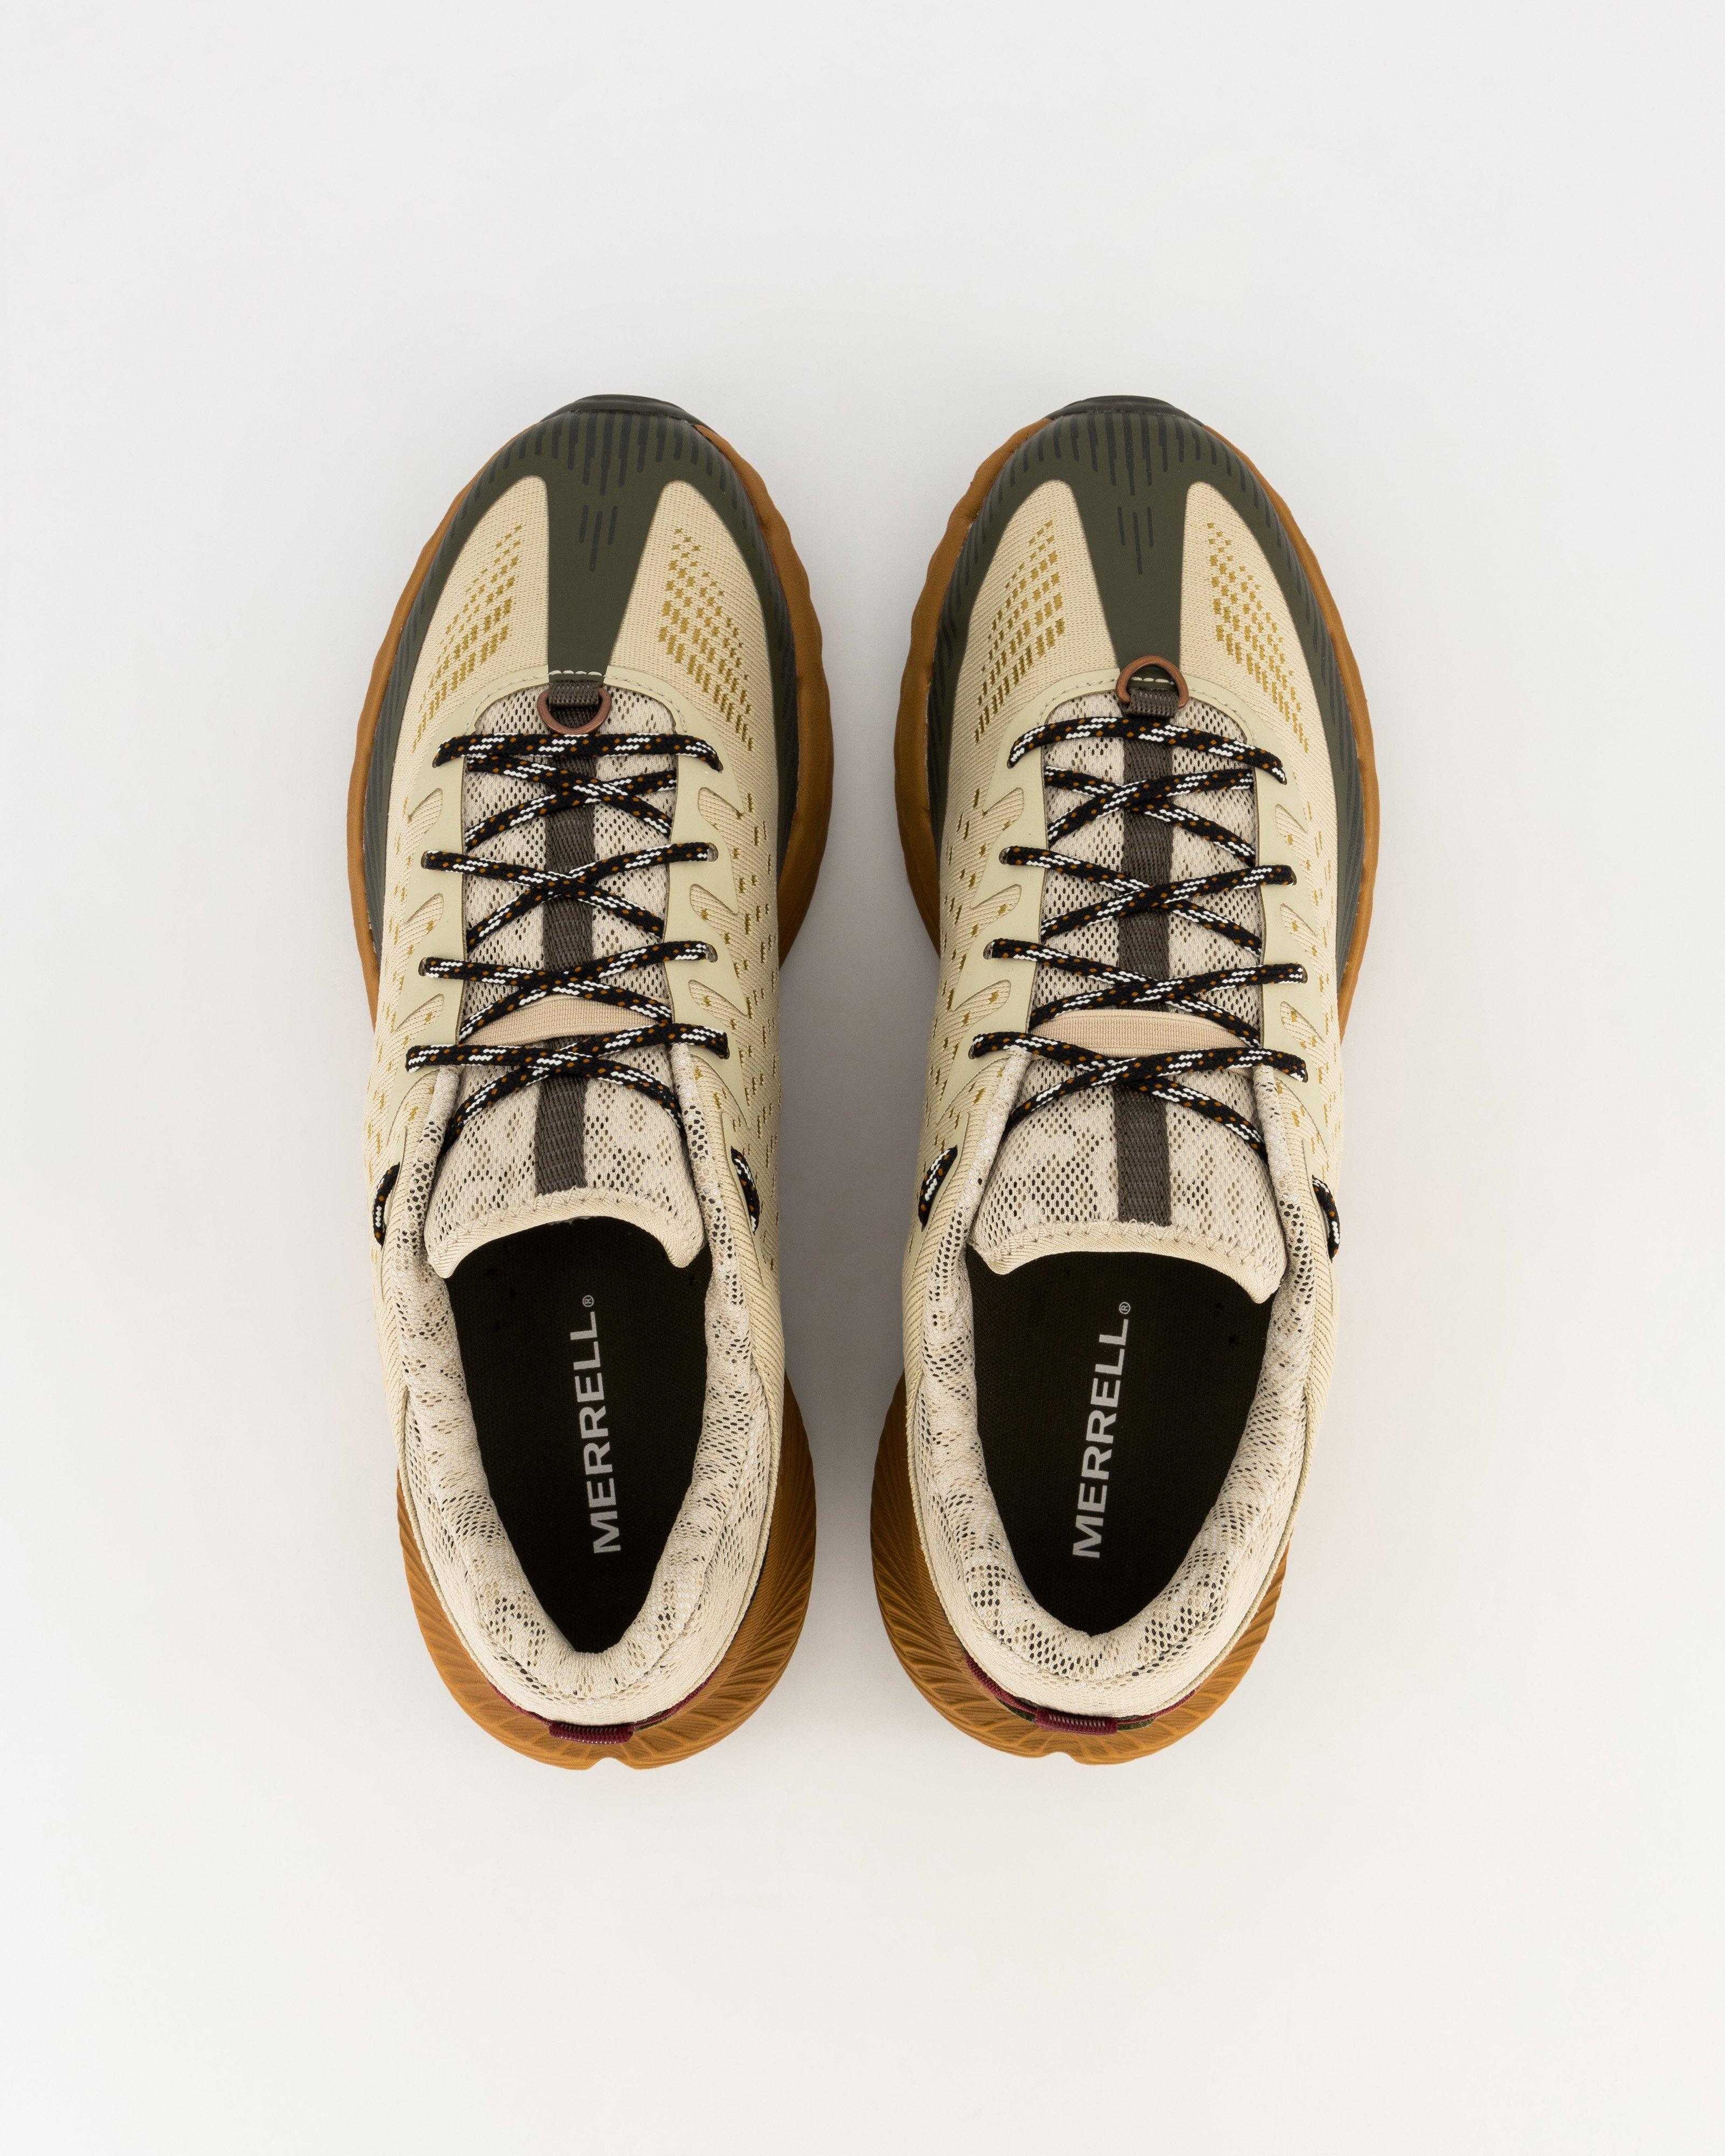 Merrell Men's Agility Peak 5 Trail Running Shoes -  Bone